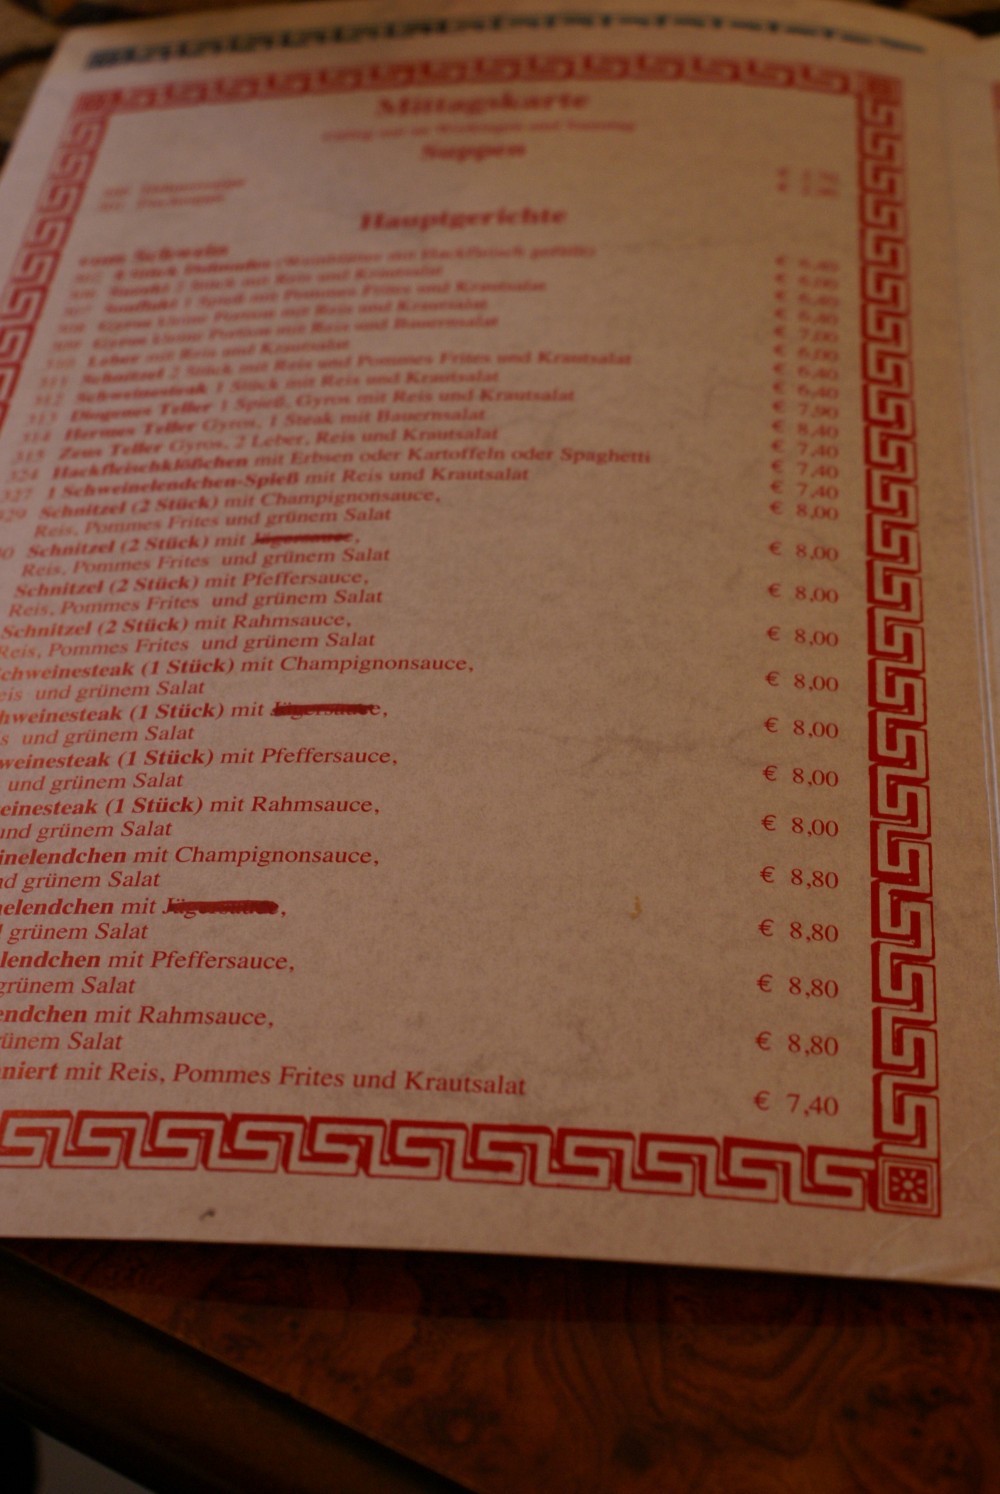 Mittagskarte, Teil 2. - Poseidon - Bregenz